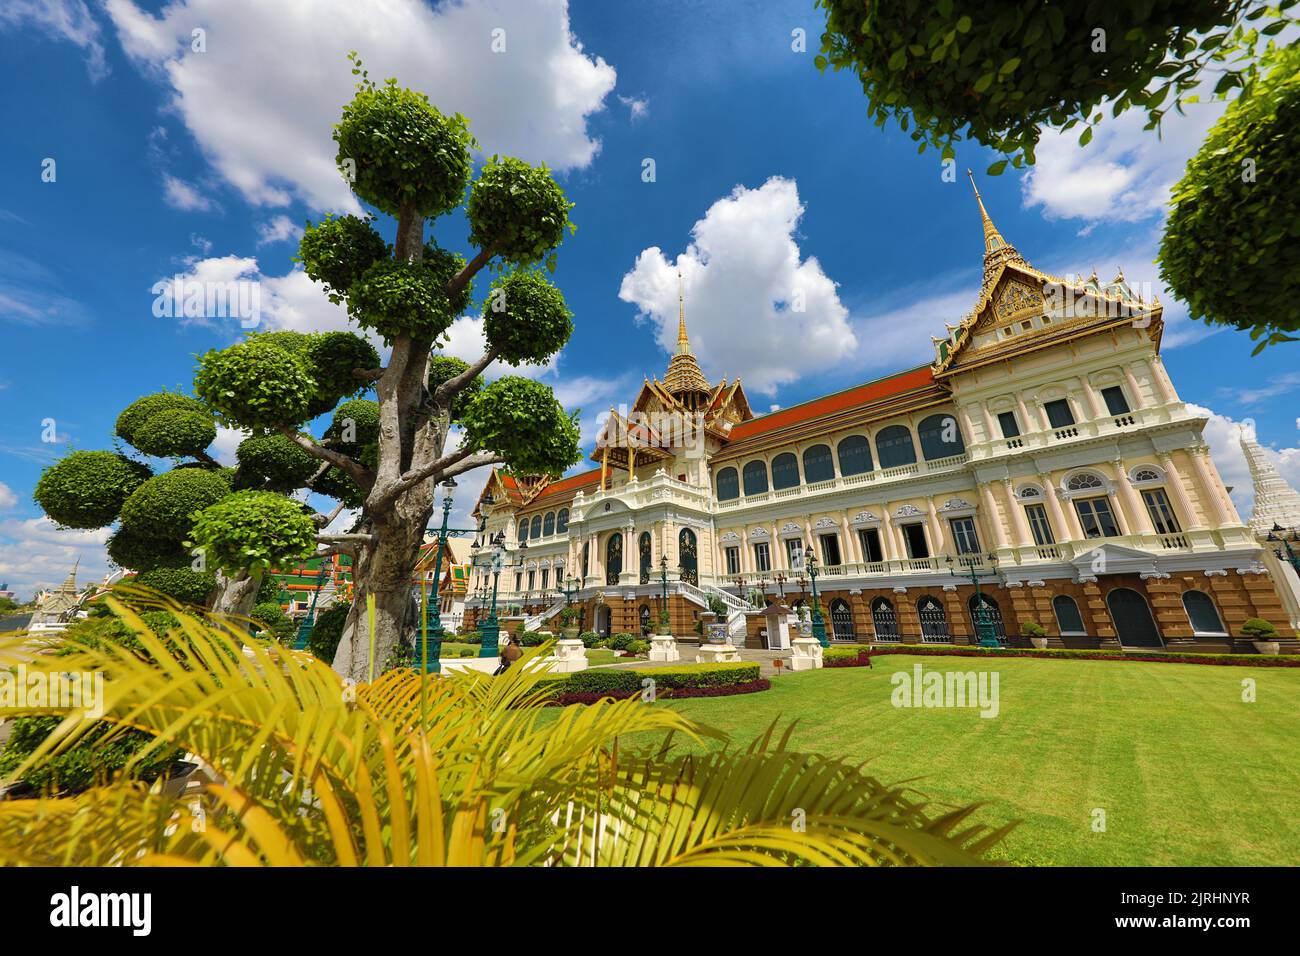 Topiary at the Grand Palace in the Grand Palace Complex, Wat Phra Kaew, Bangkok, Thailand Stock Photo